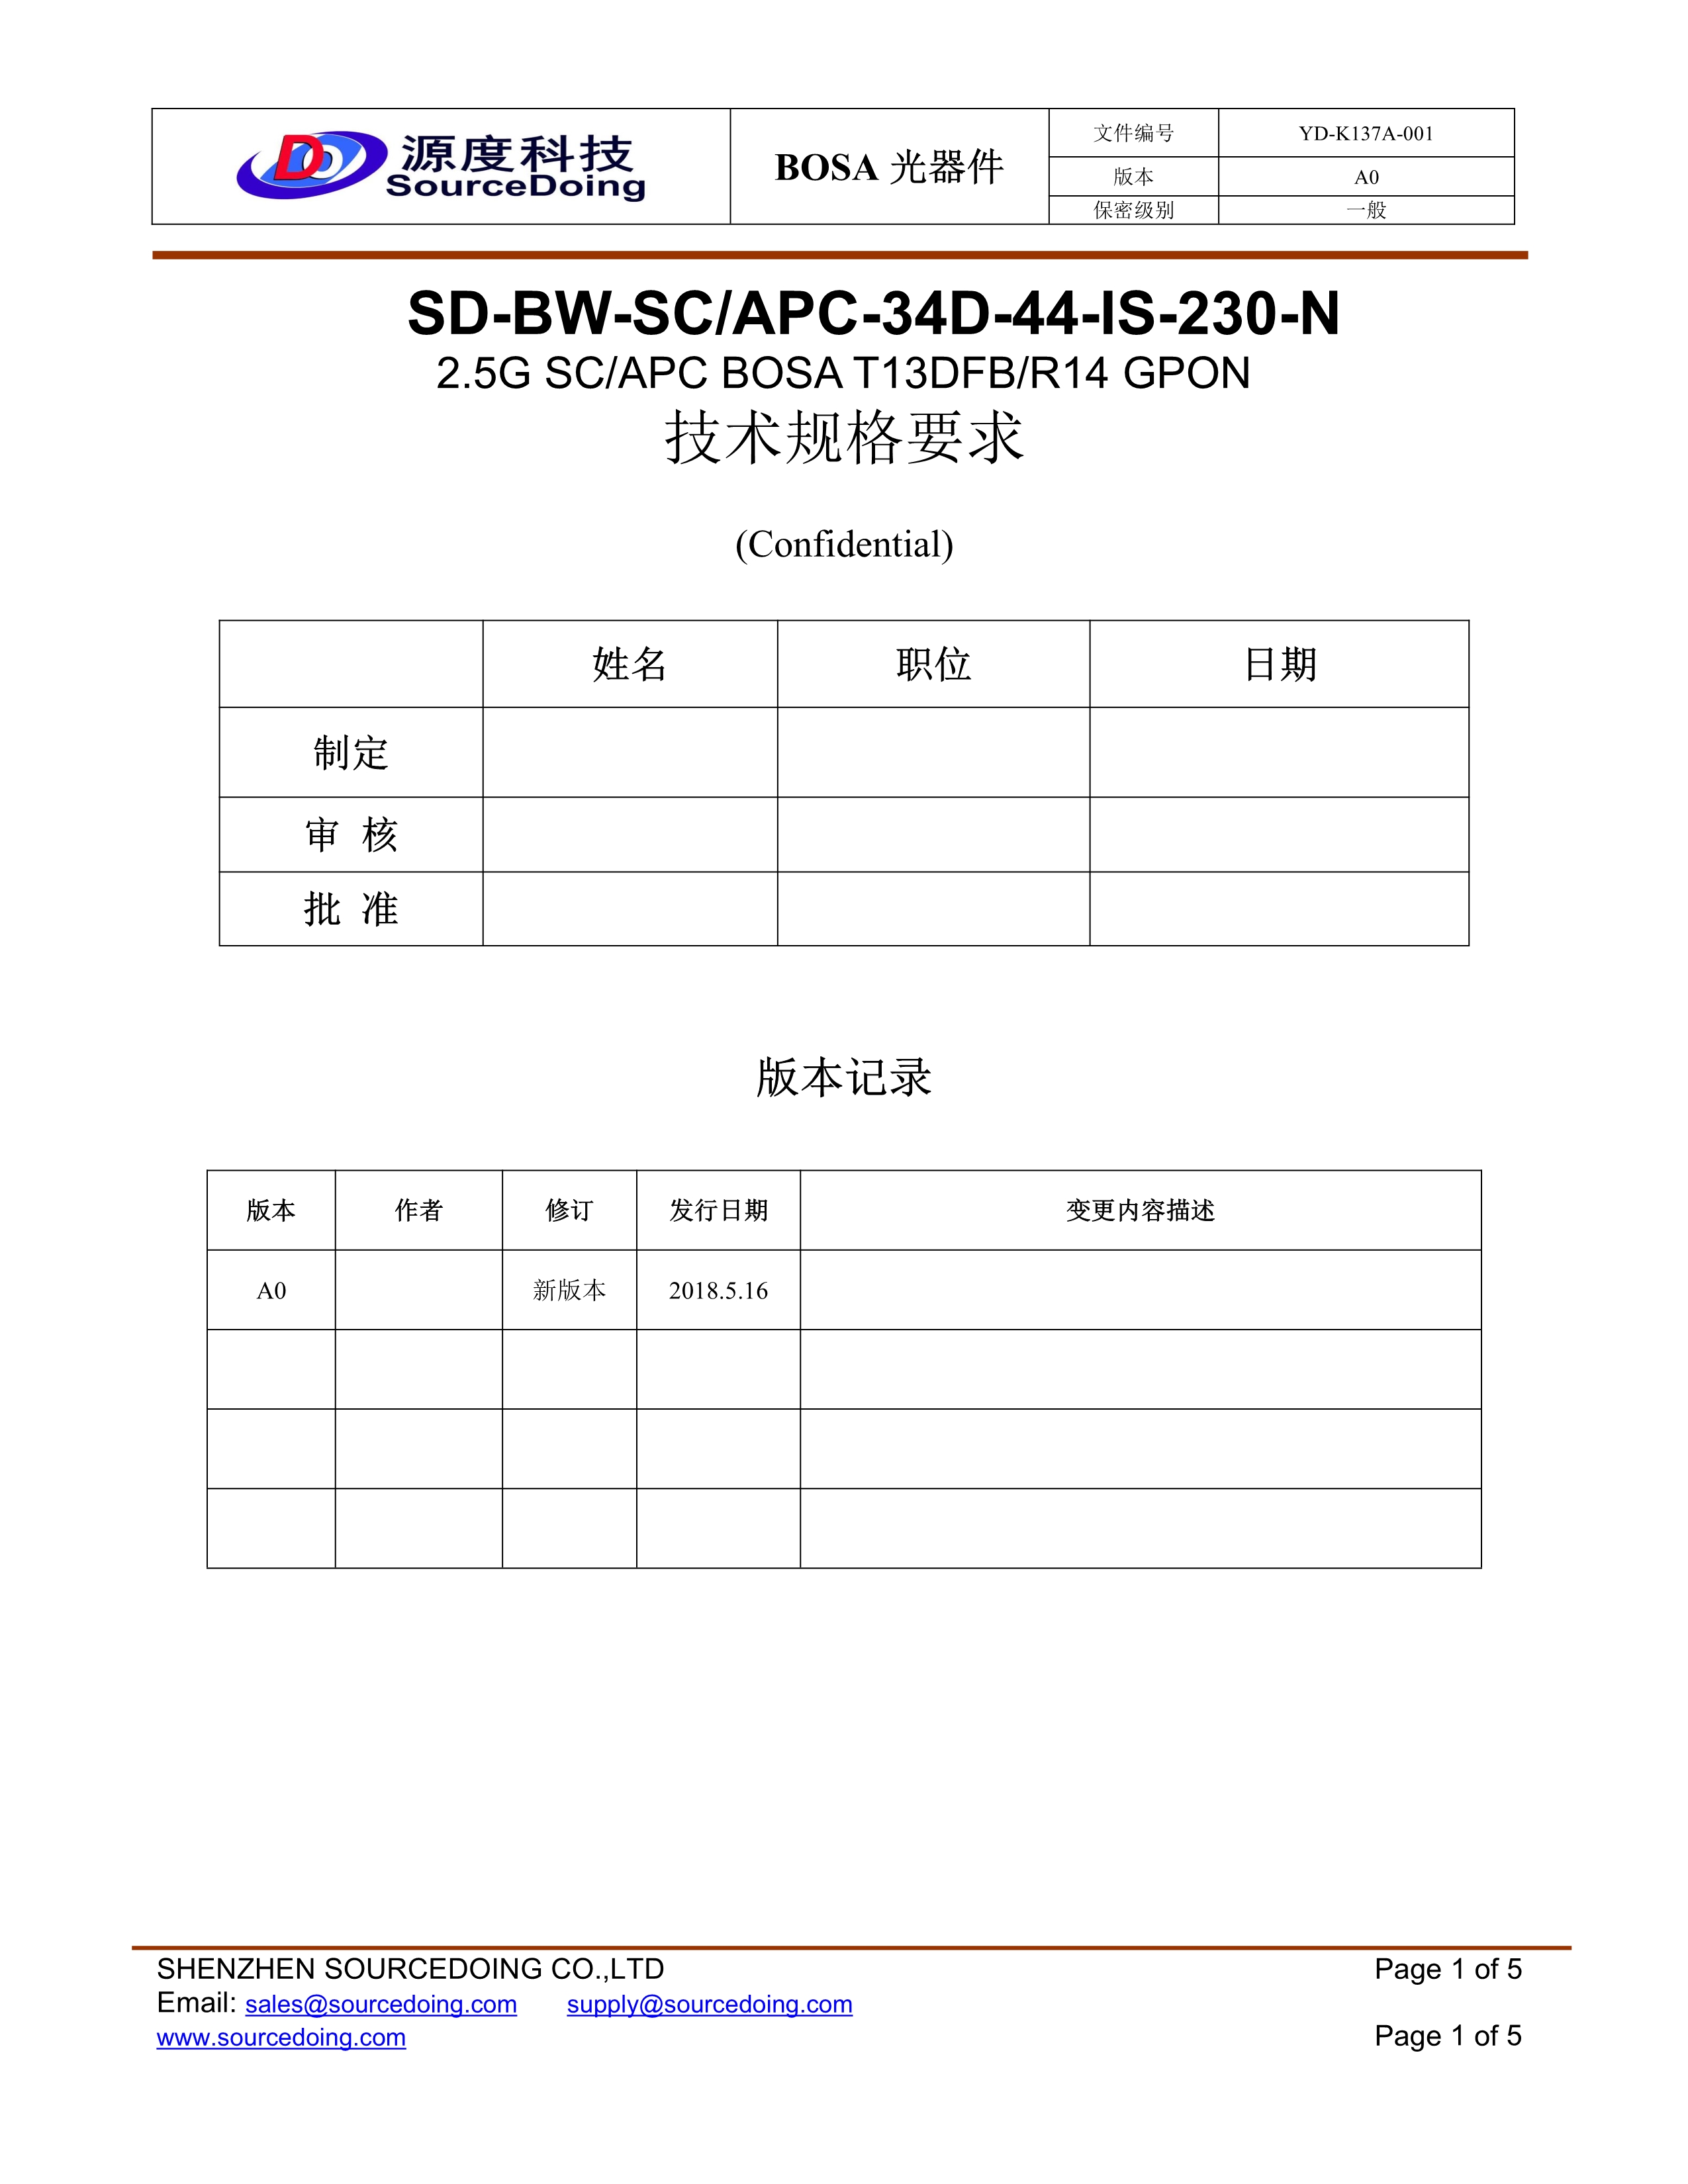 SD-BW-SCAPC-34D-44-IS-230-N(1)_1.jpg